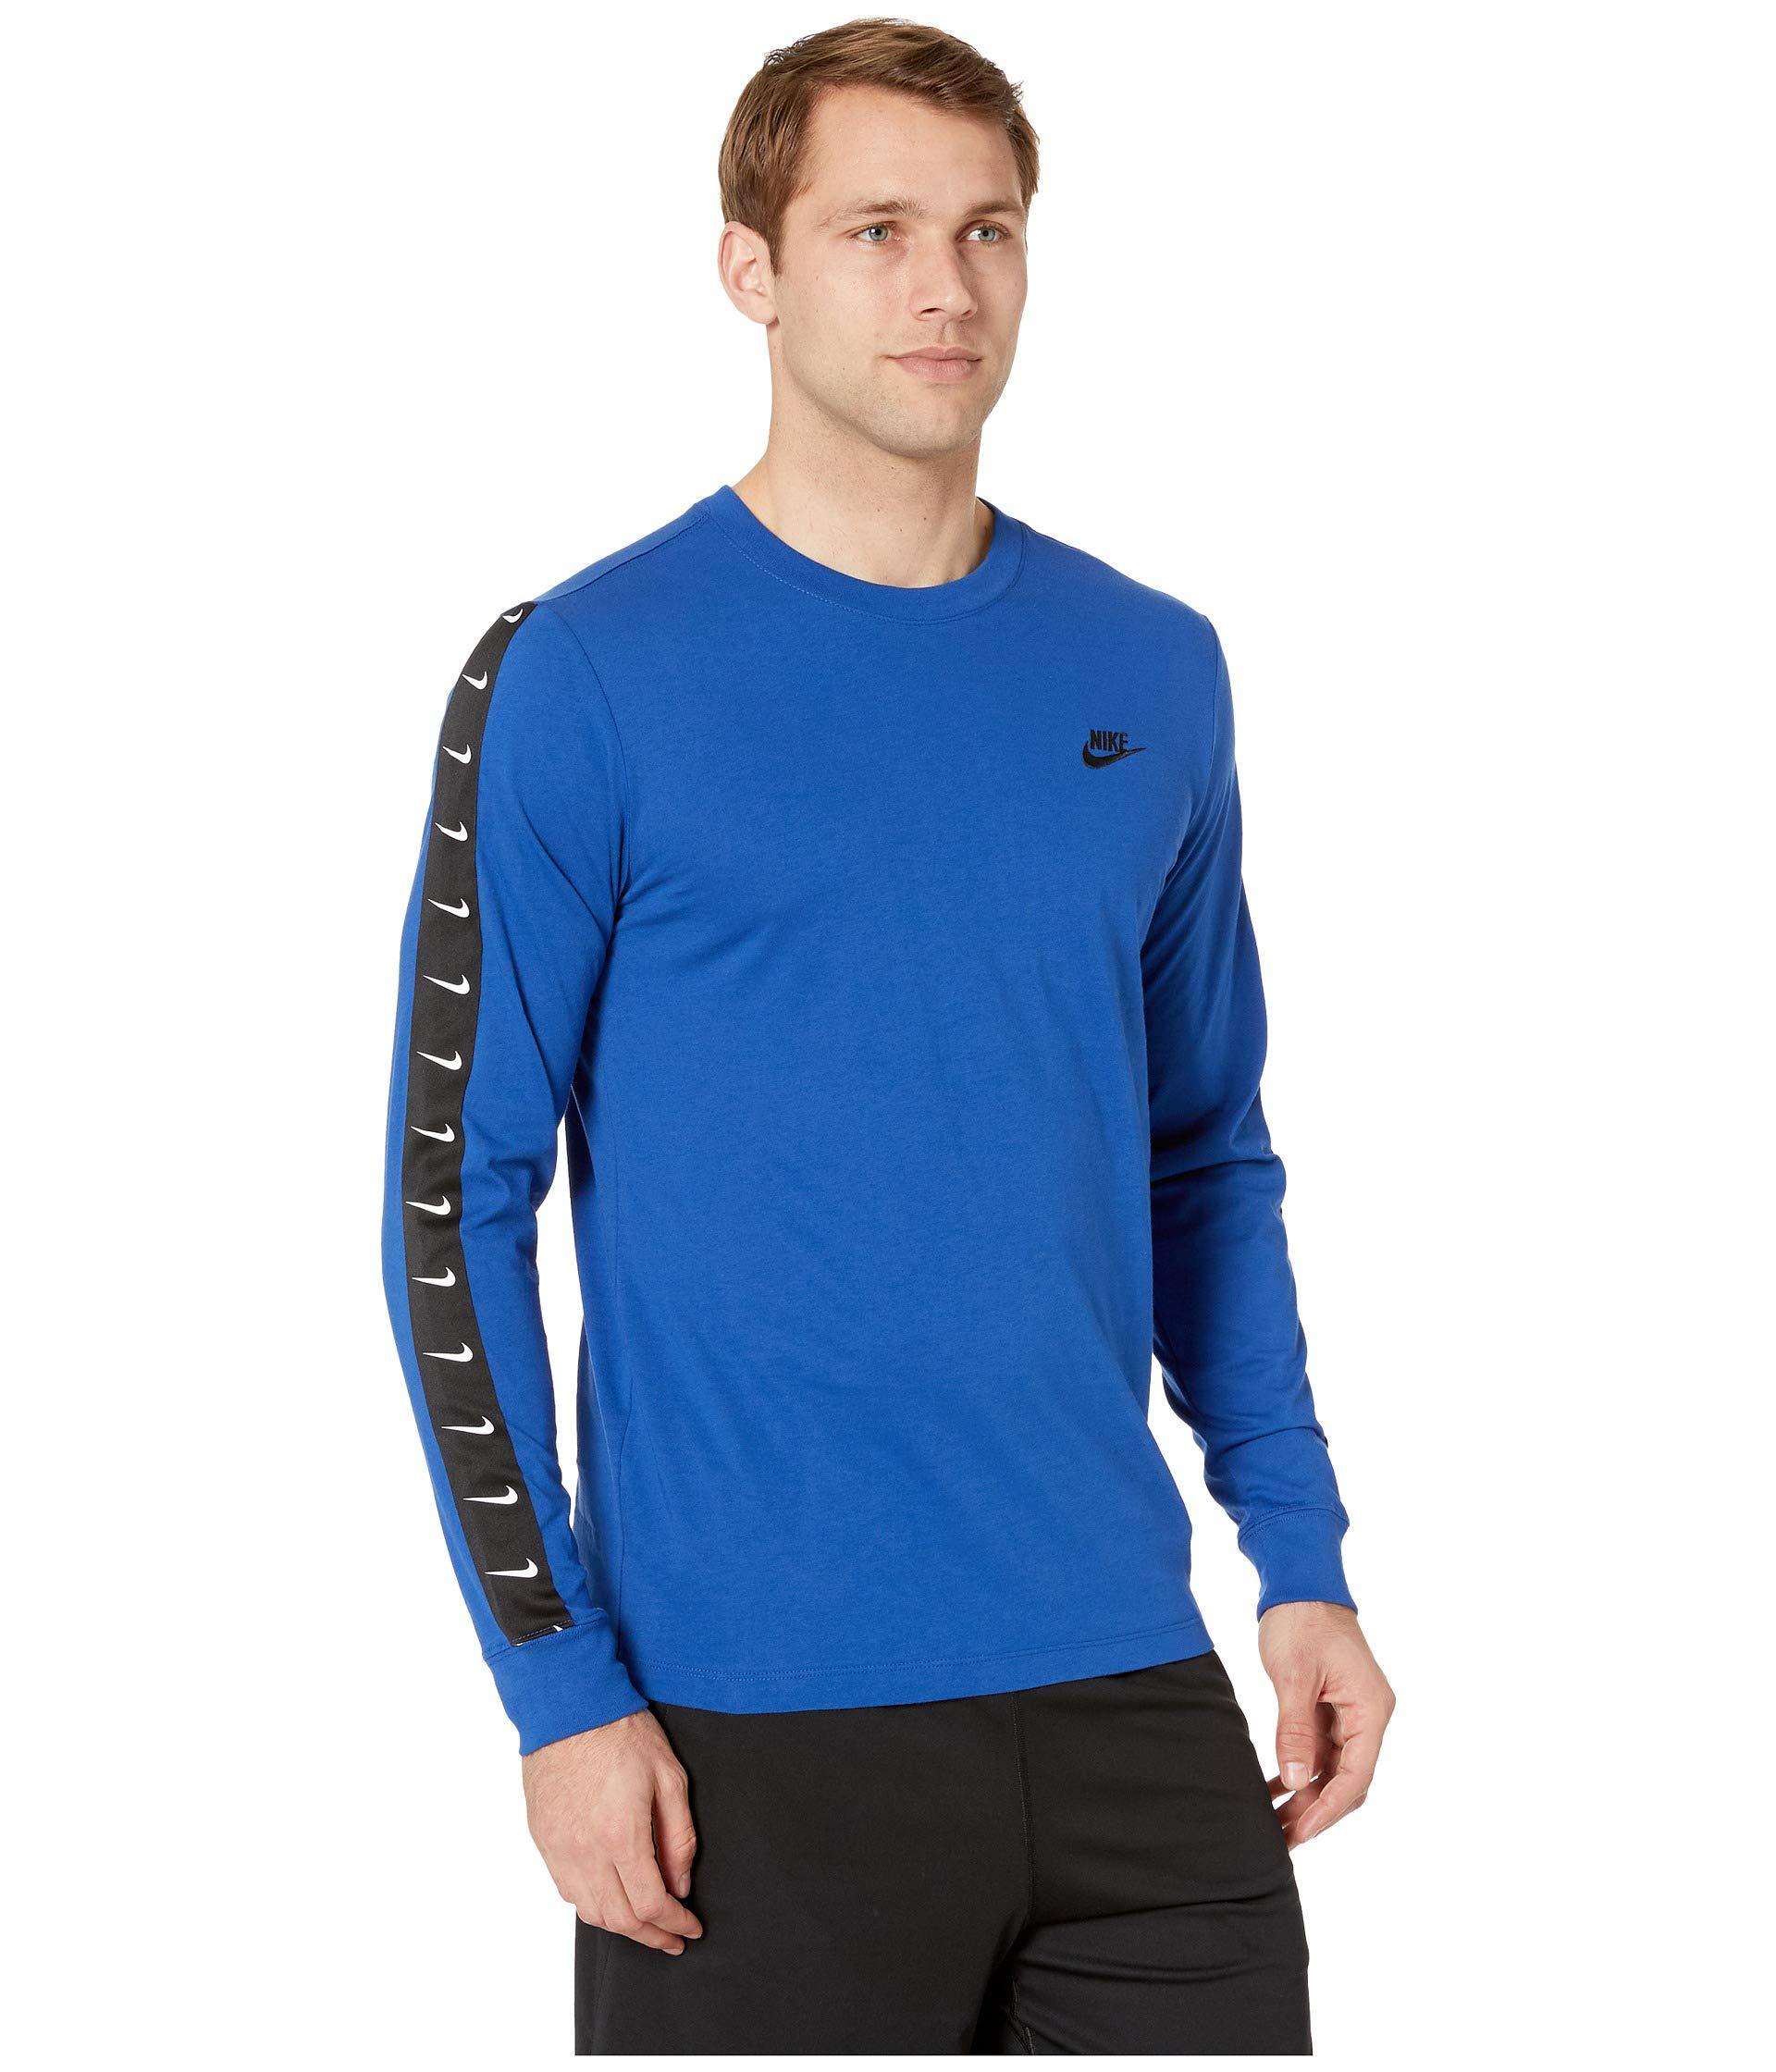 Nike Cotton Nsw Long Sleeve Swoosh 2 Tee in Blue for Men - Lyst